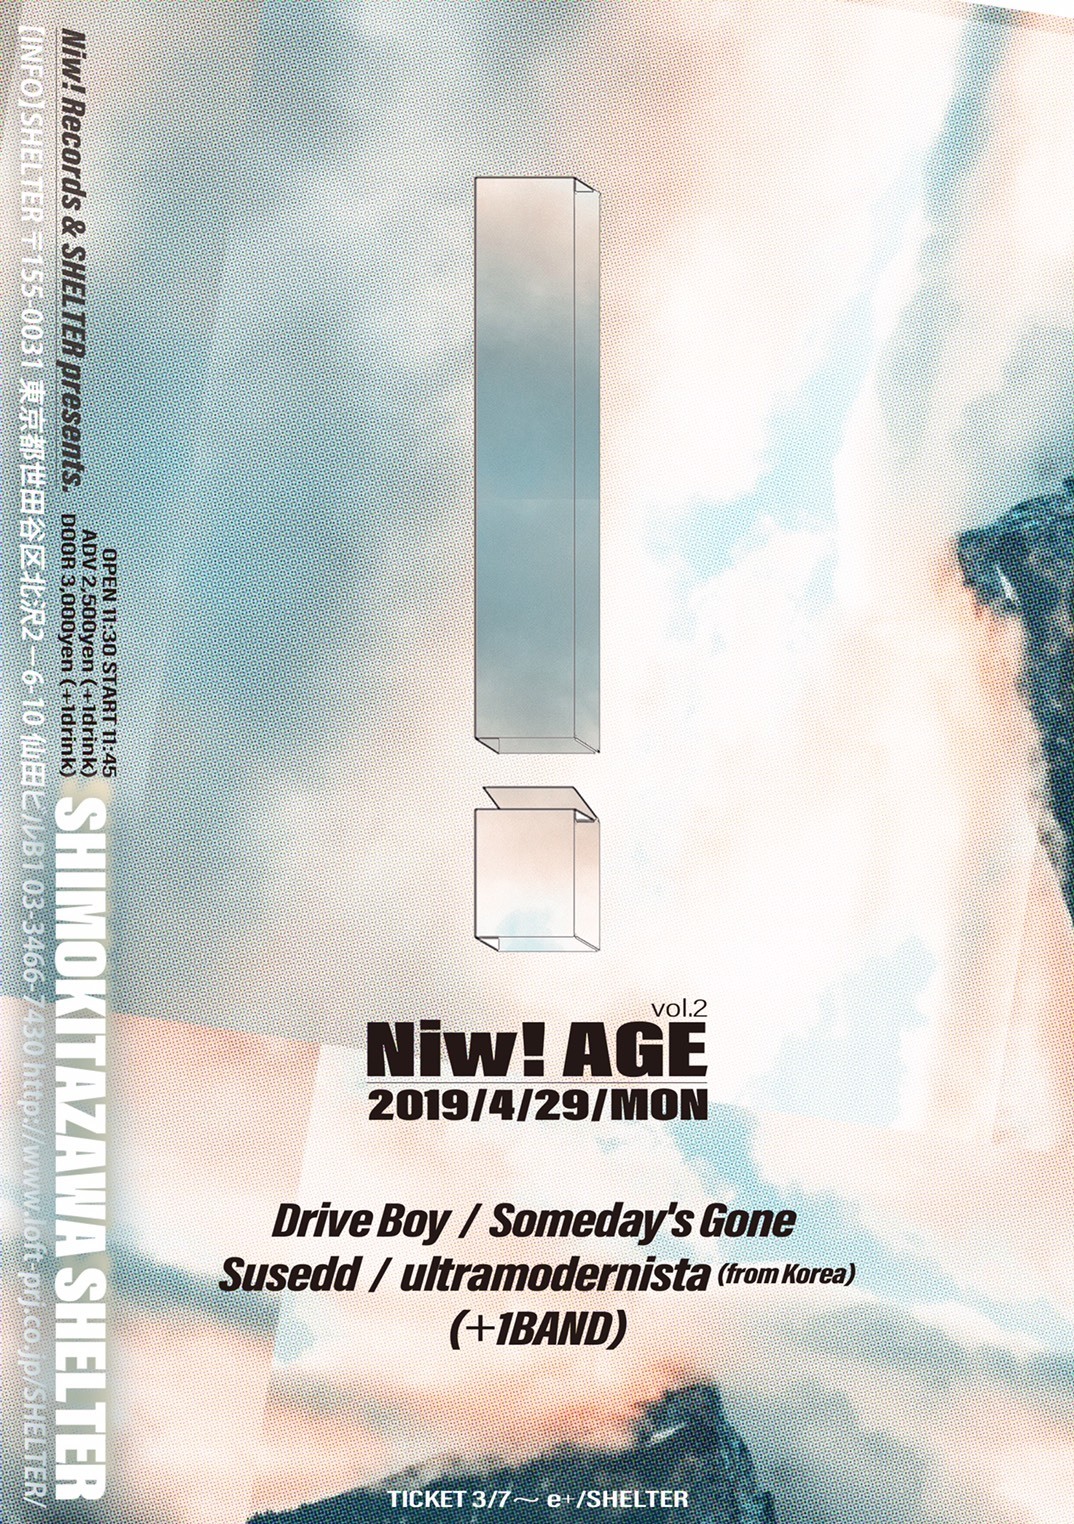 Niw! Records & SHELTER presents"Niw! AGE" vol.2